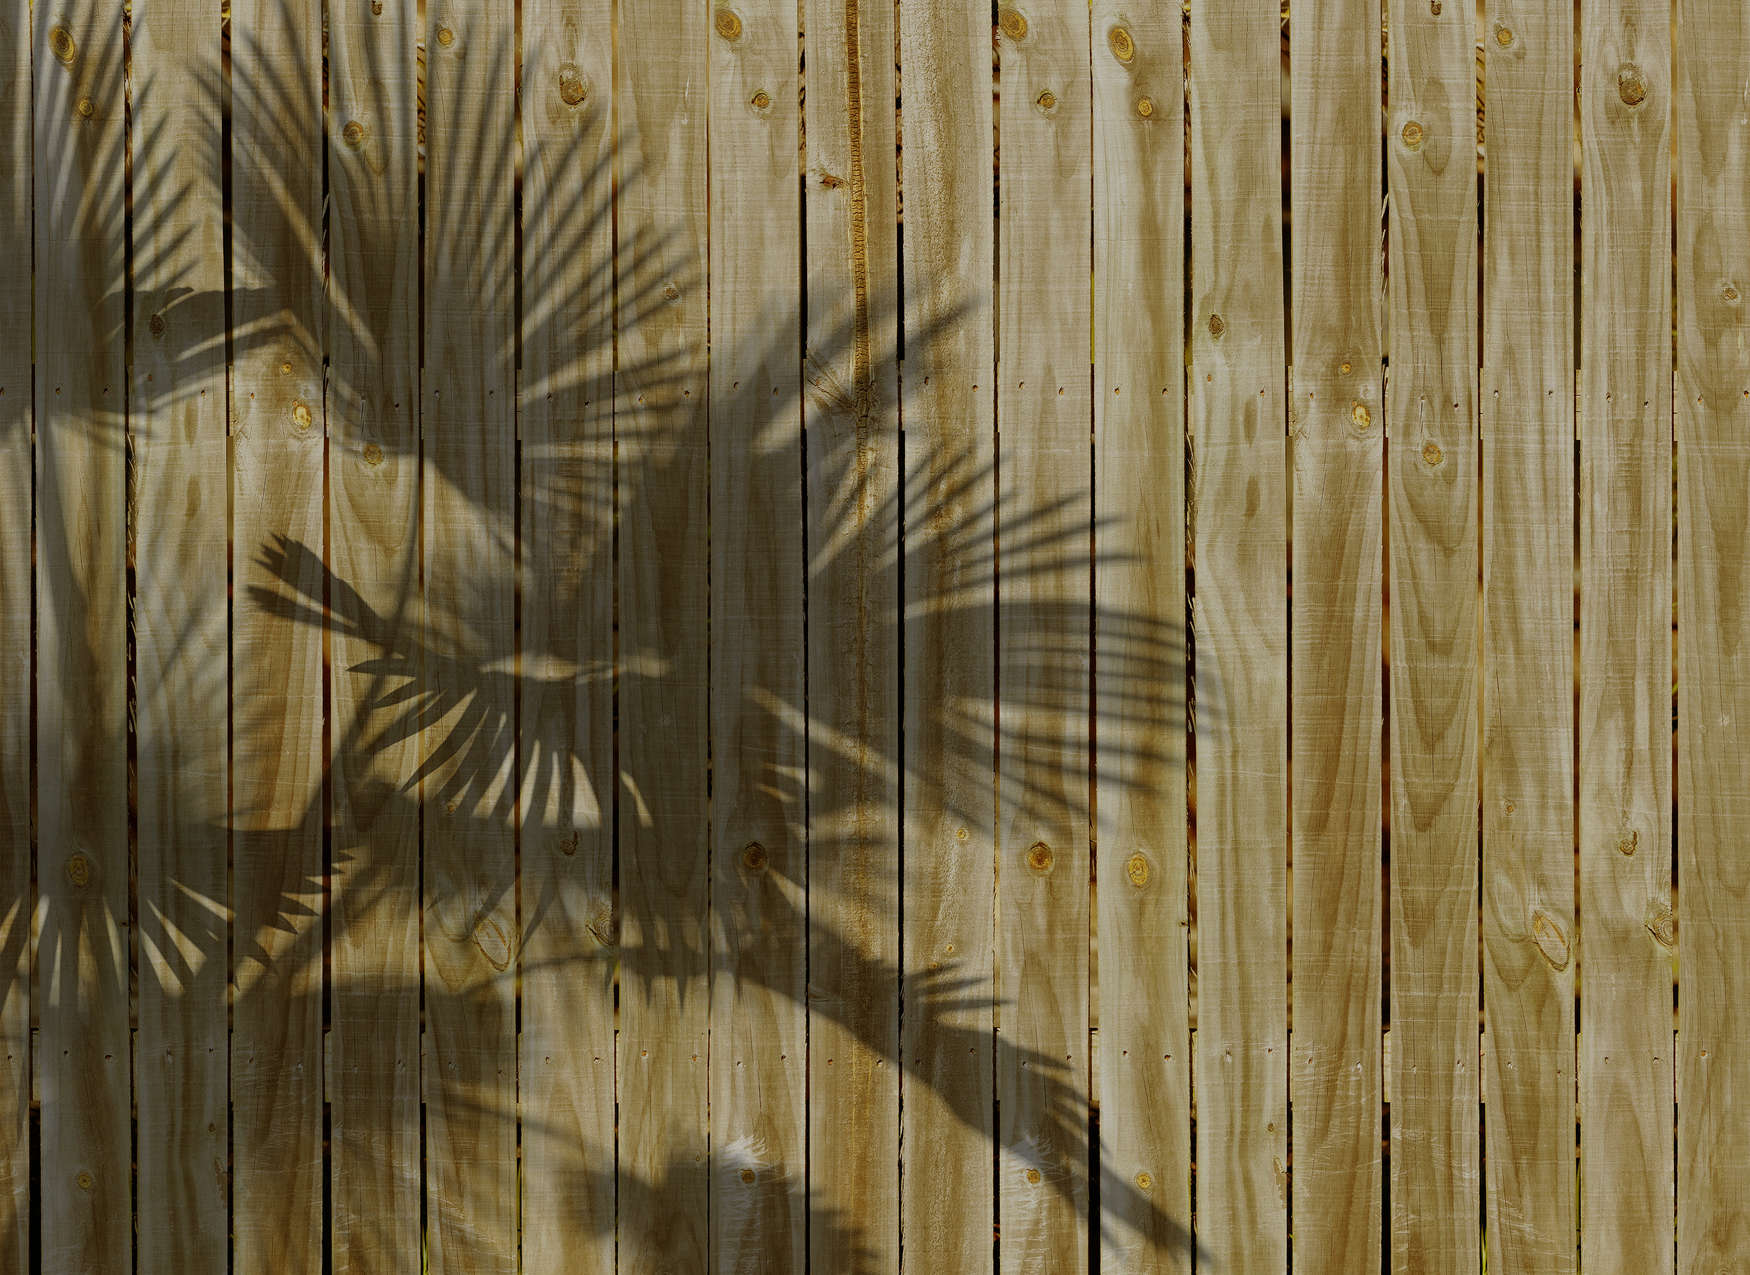             Wood-look mural with palm leaf shadows - Beige
        